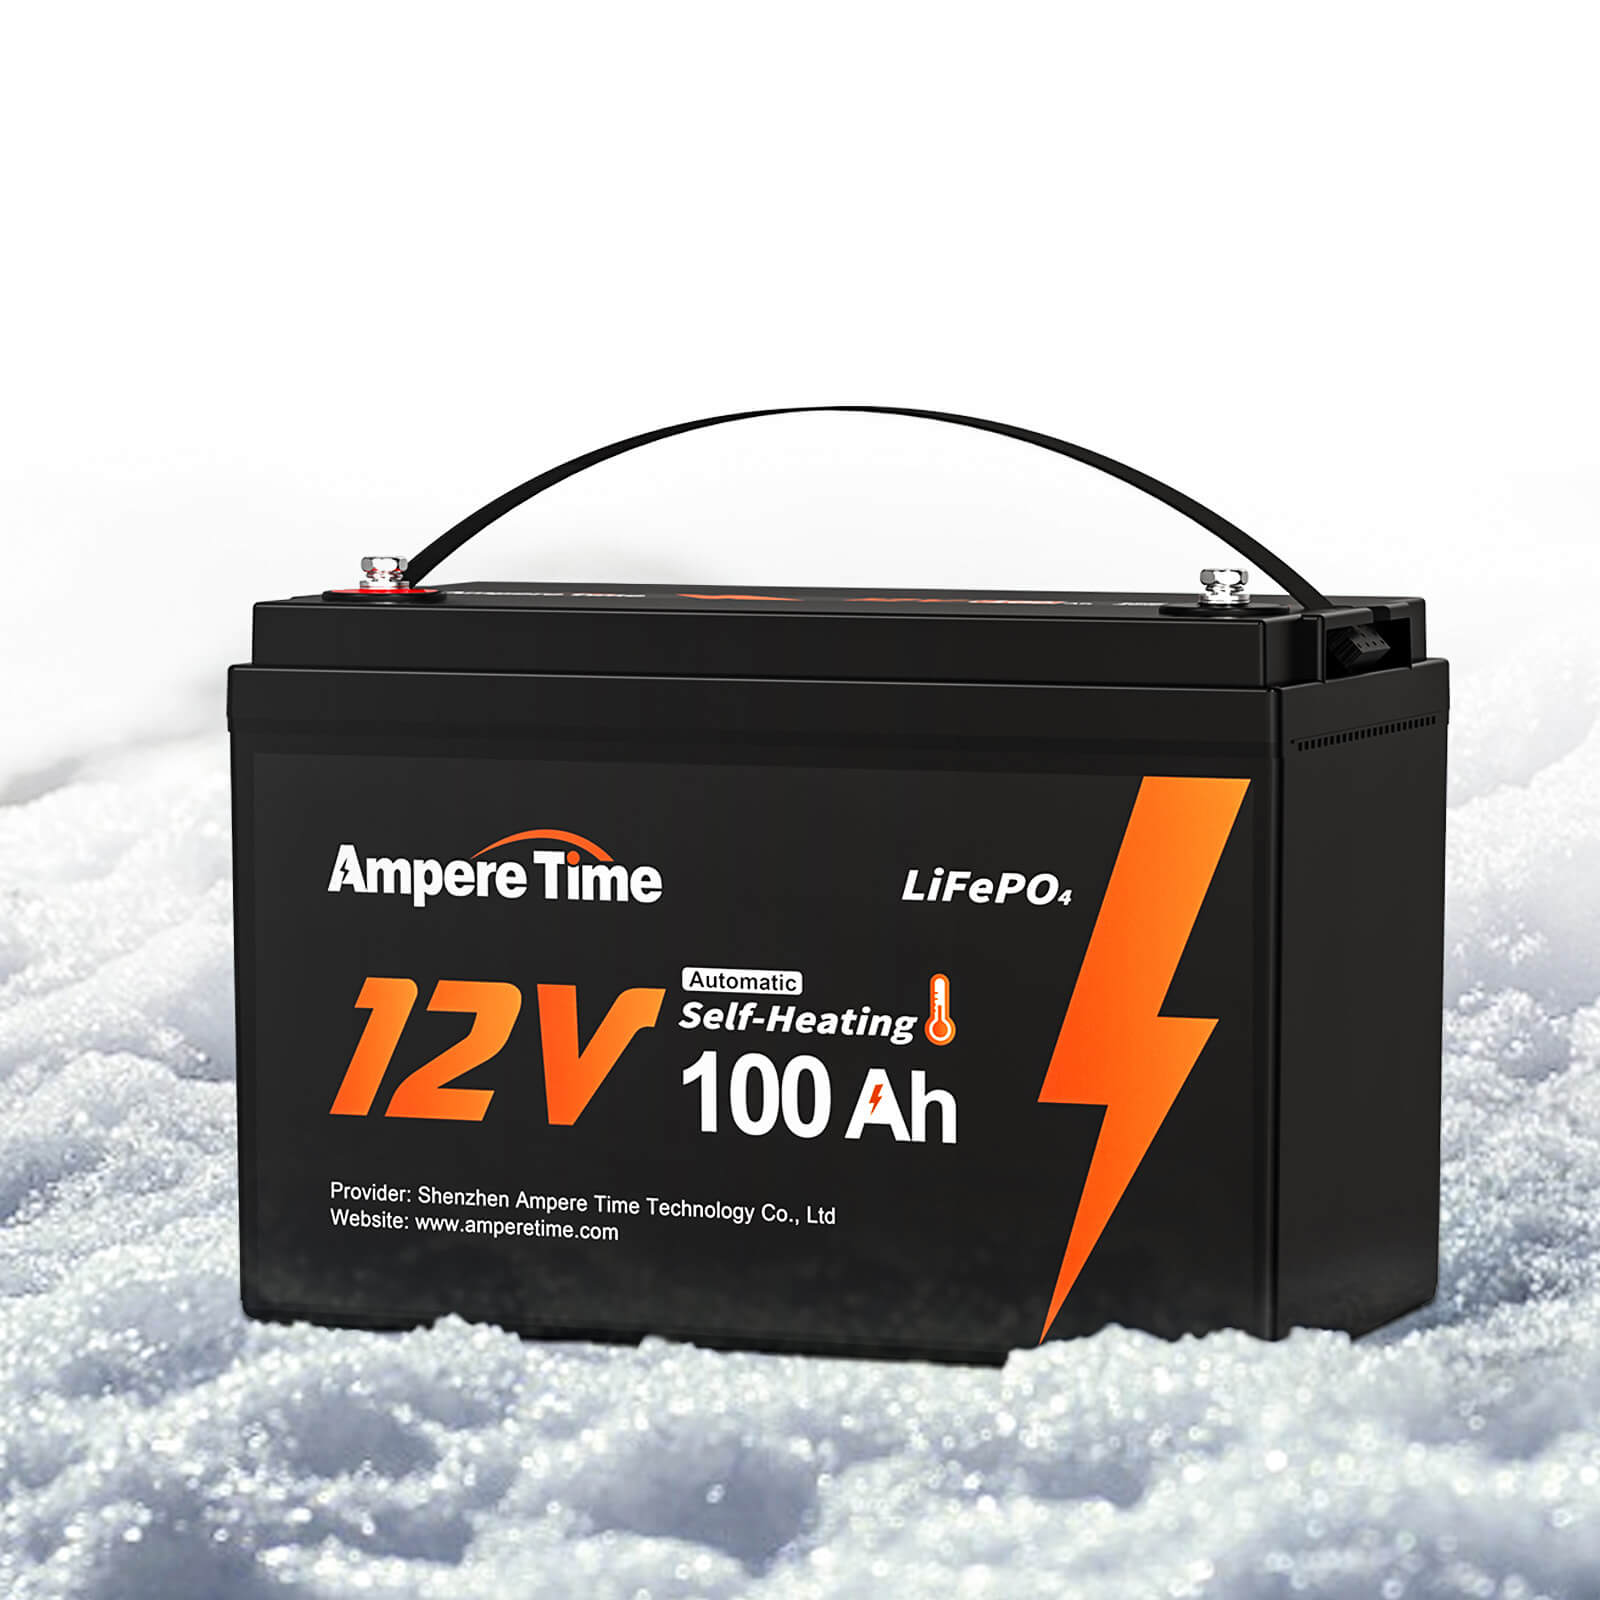 Ampere Time Selbsterwärmende 12V 100Ah LiFePO4 Batterie -20℃ bis 50°C Tieftemperatur-Ladung https://www.litime.de/products/litime-12v-100ah-selbstwarmende-lifepo4-batterie-mit-100a-bms-tieftemperaturschutz